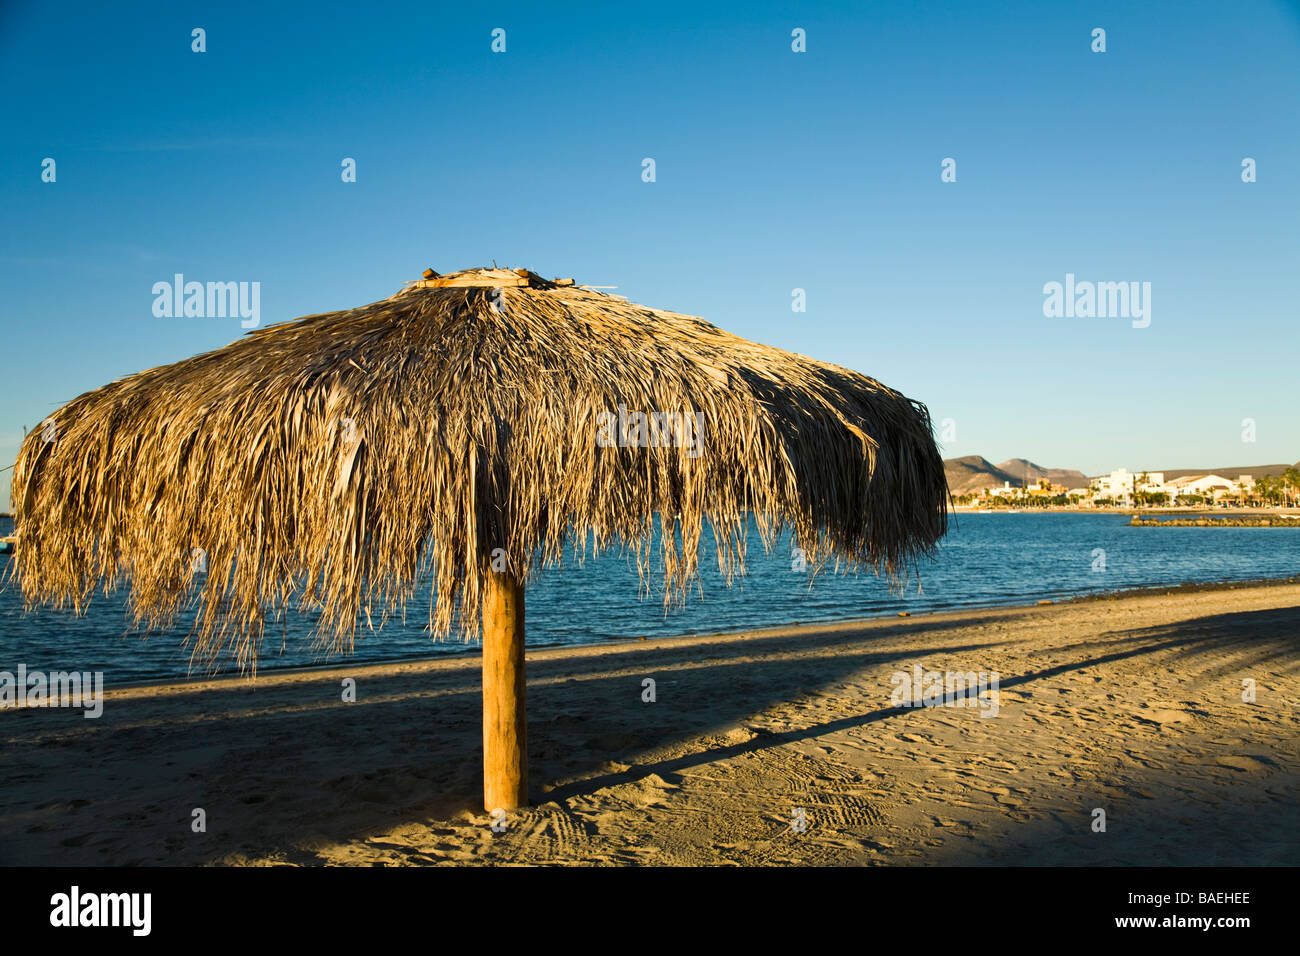 MEXICO La Paz Palapa thatched umbrellas on beach along bay Stock Photo